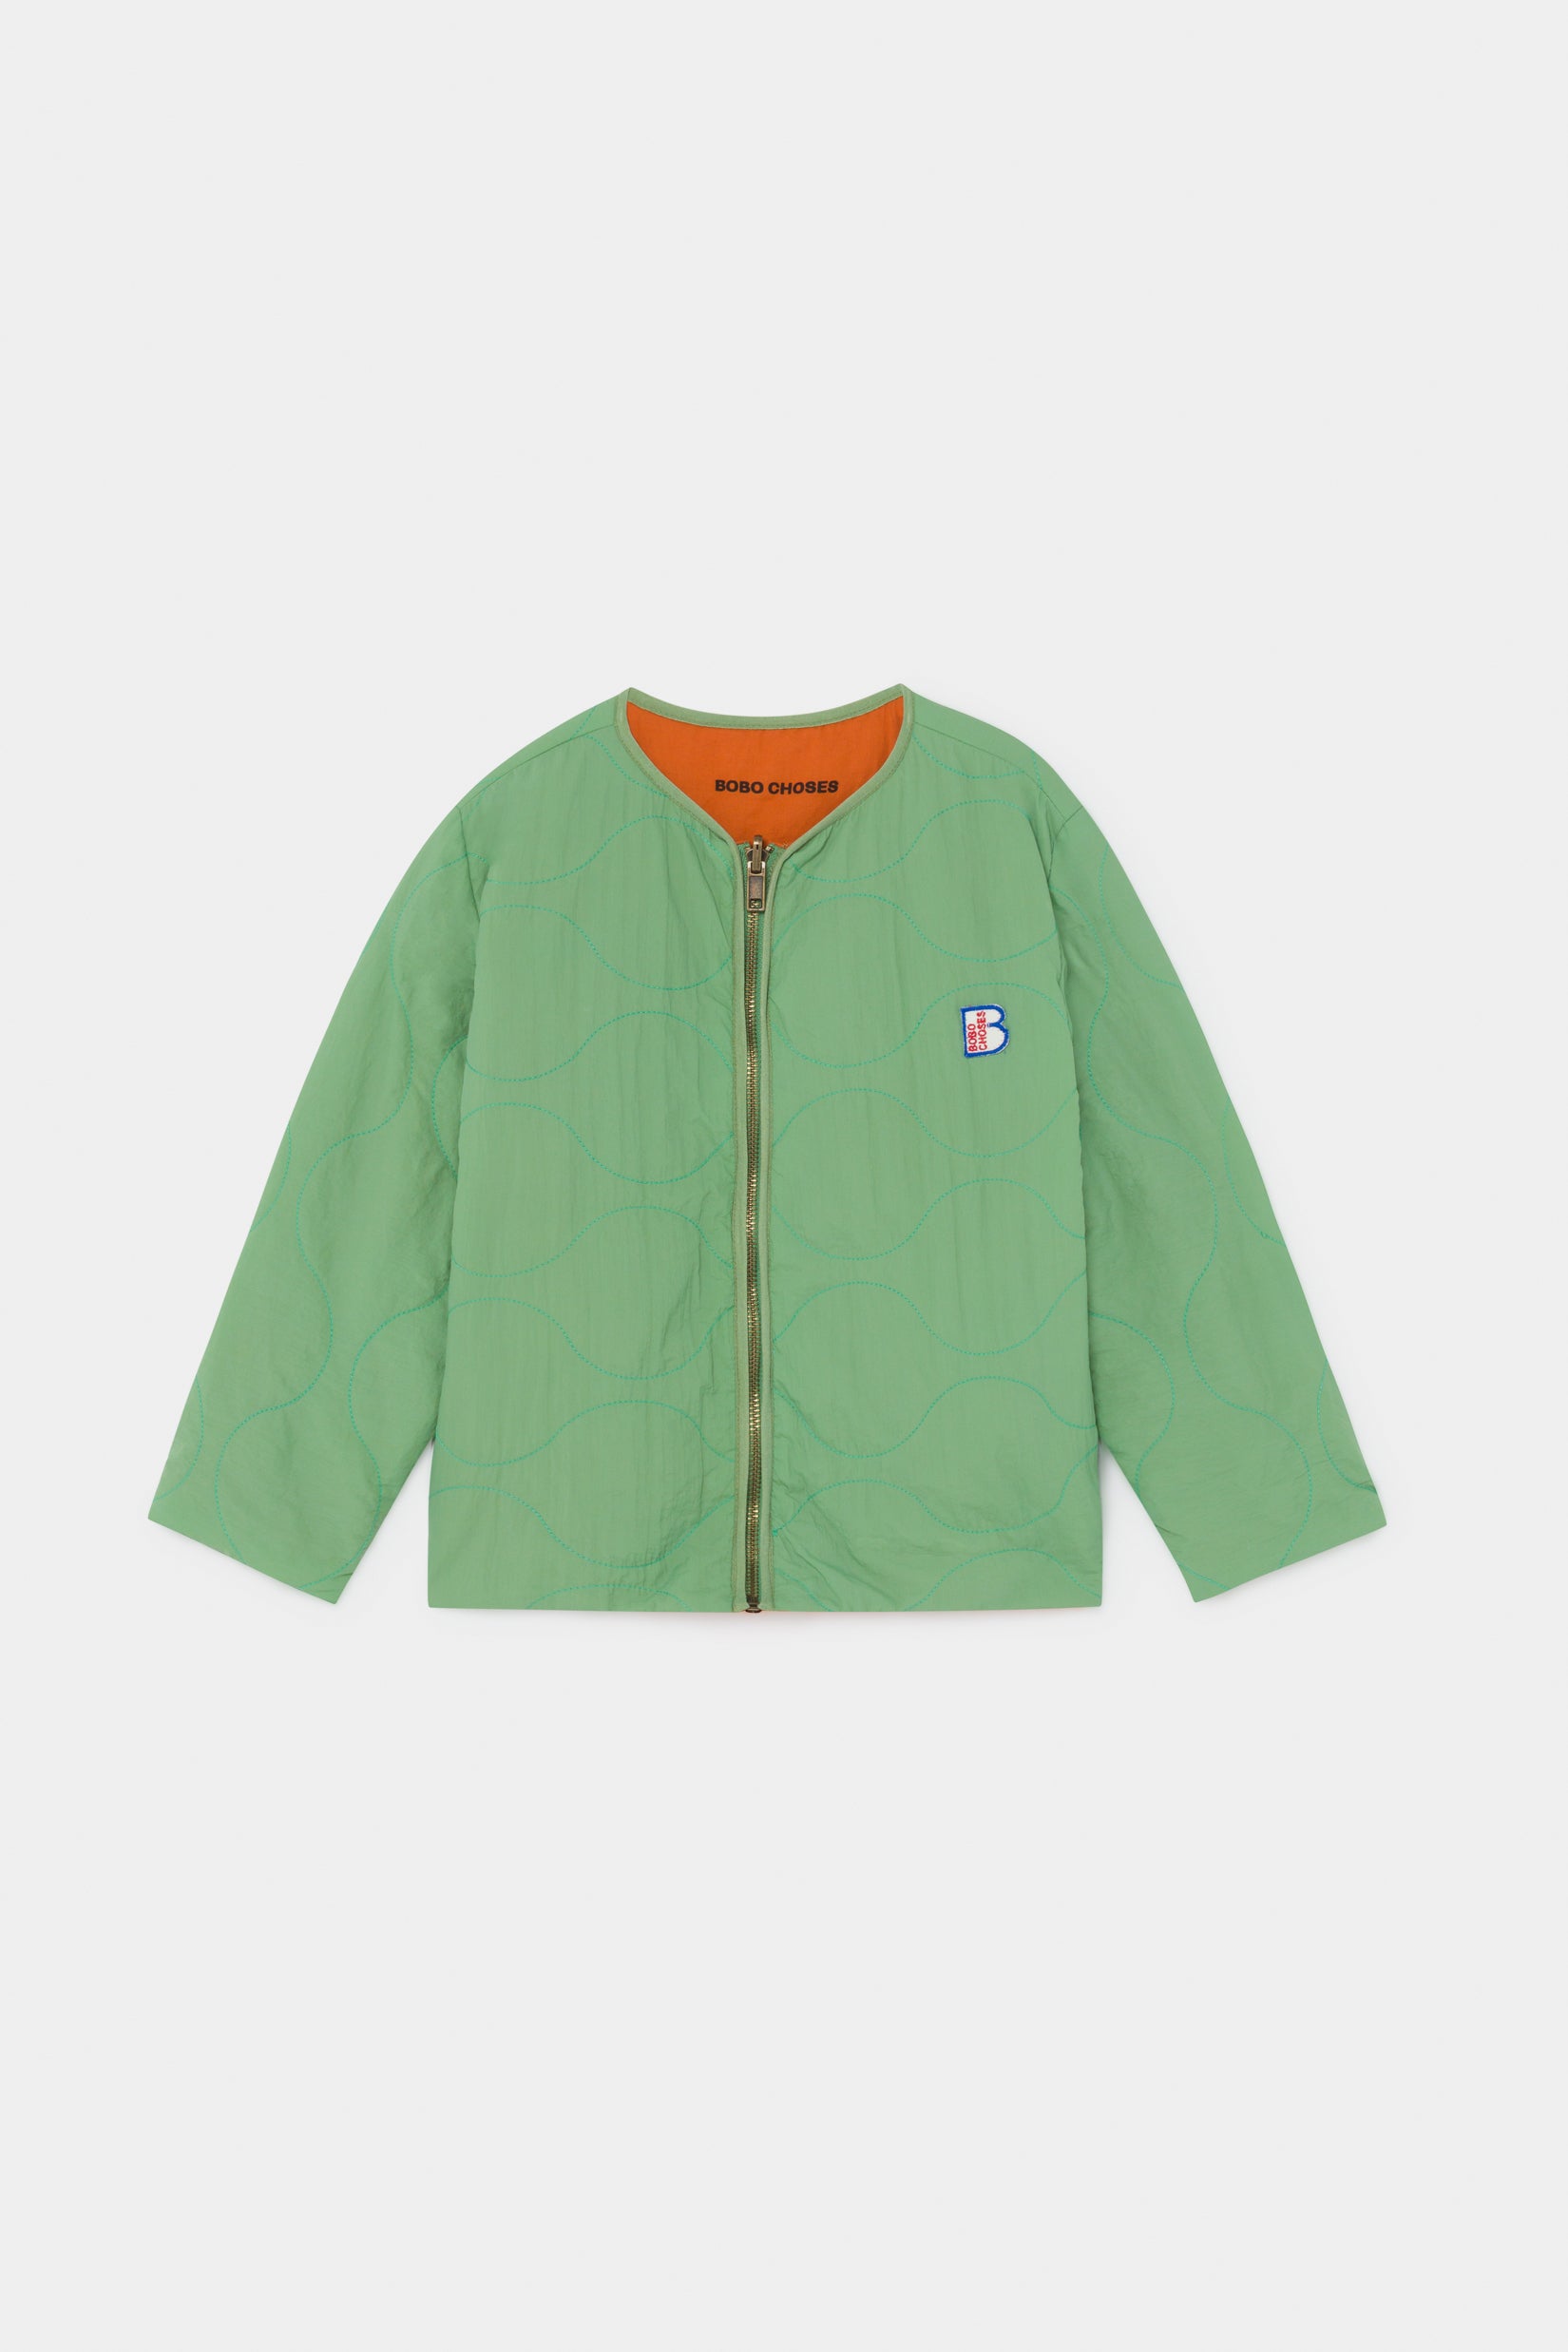 Boys Green & Orange Reversible Jacket